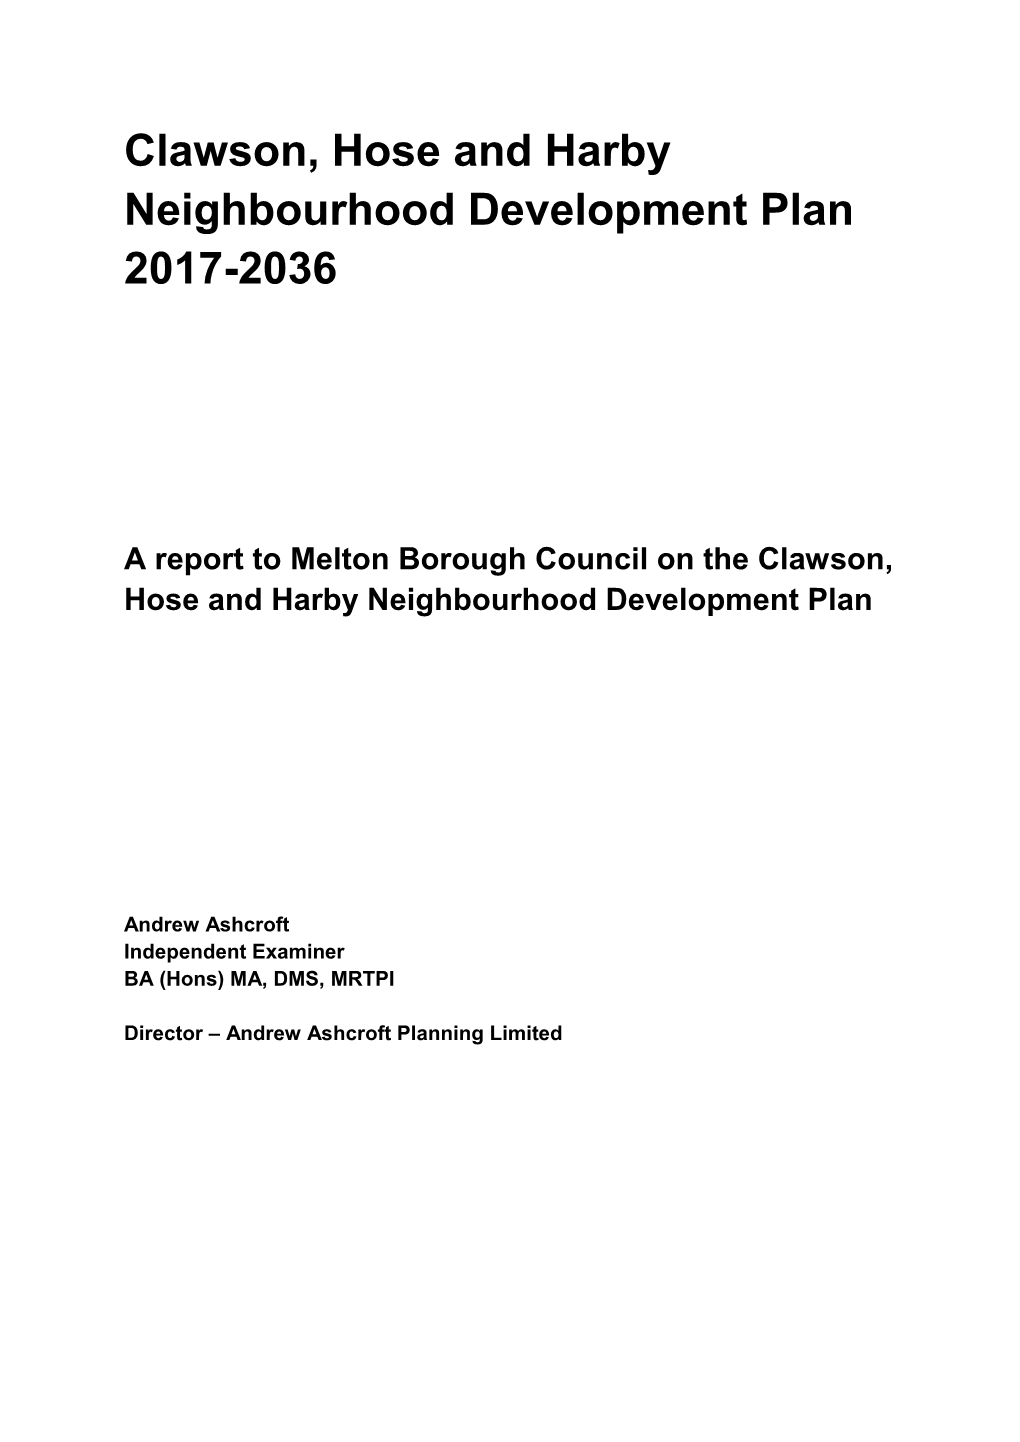 Clawson, Hose and Harby Neighbourhood Development Plan 2017-2036